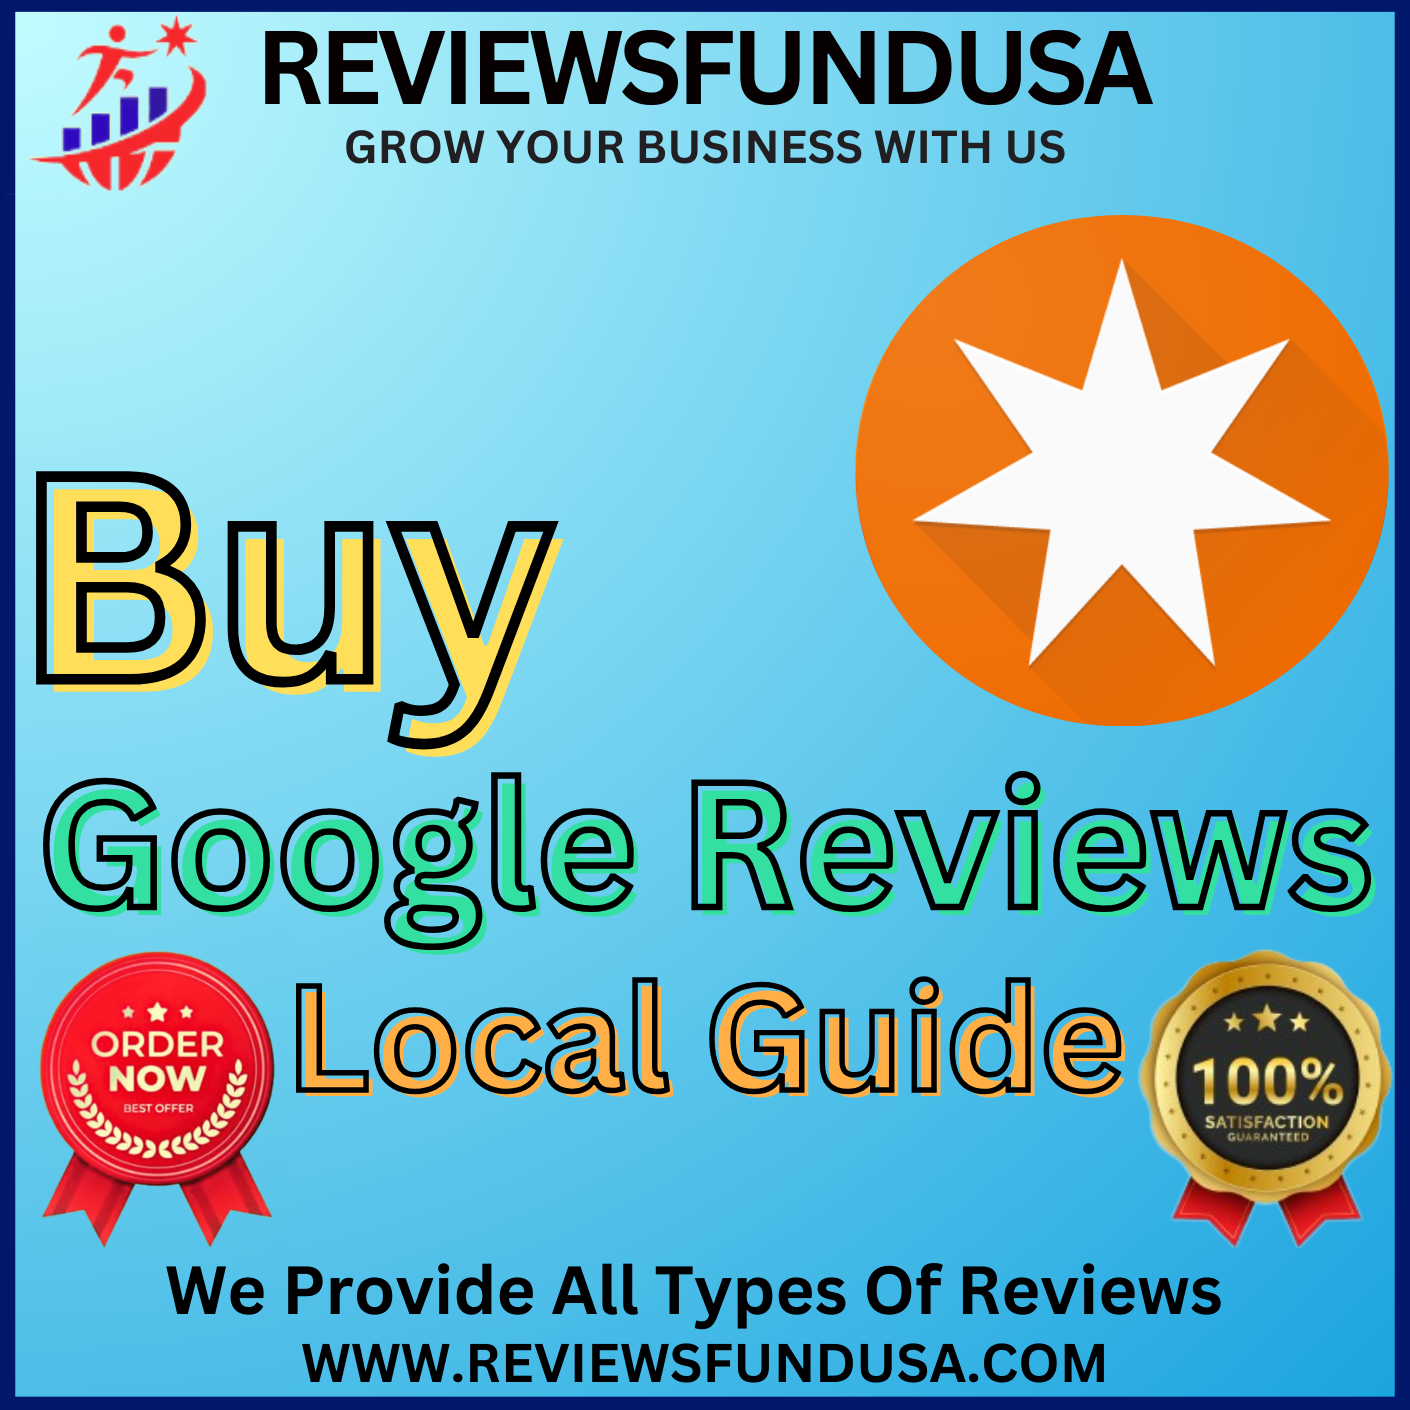 Buy Google Local Guide Reviews - High-Quality Reviews